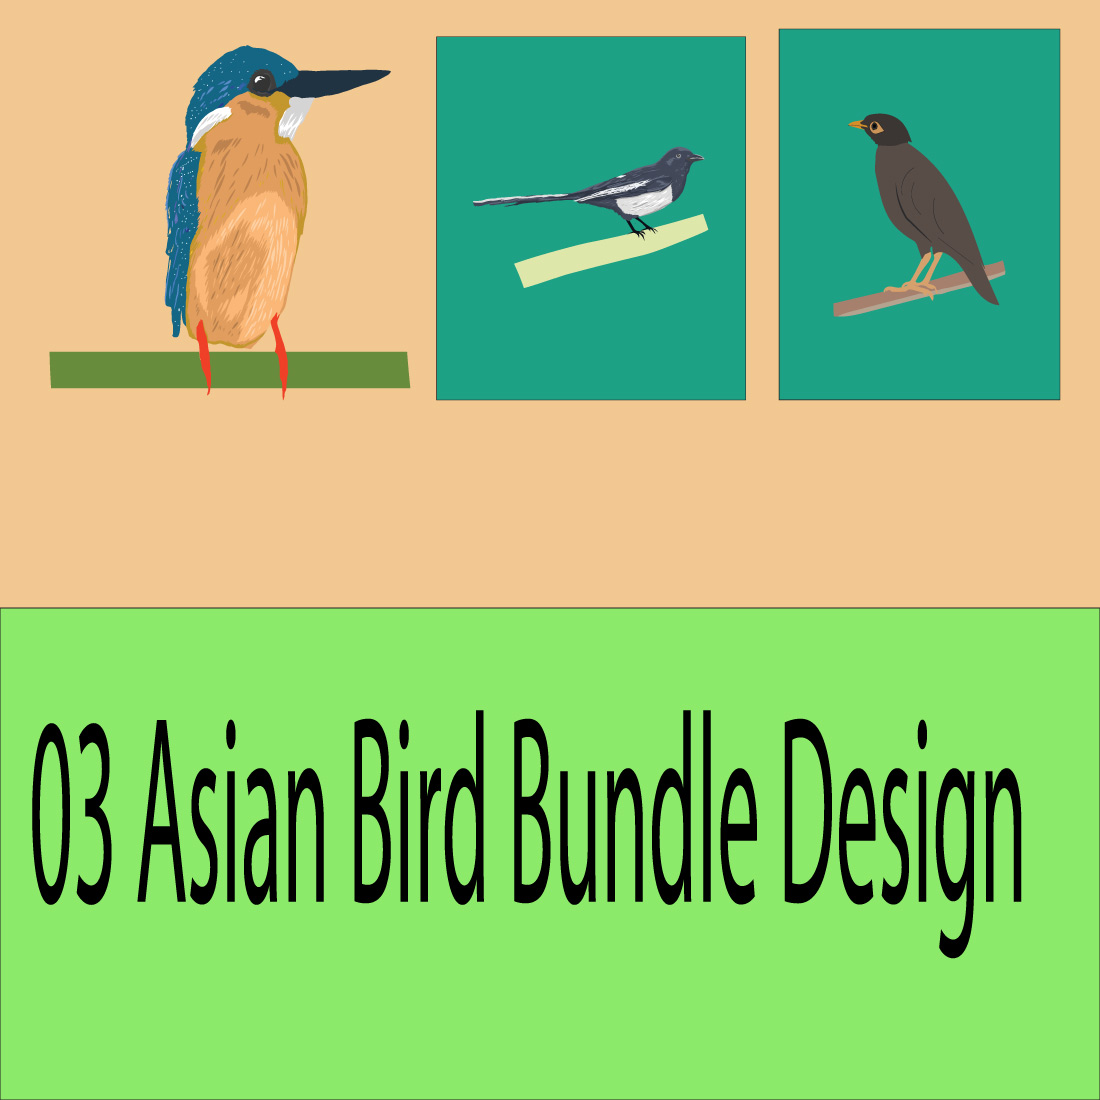 3 Asian Bird Bundle Design cover image.